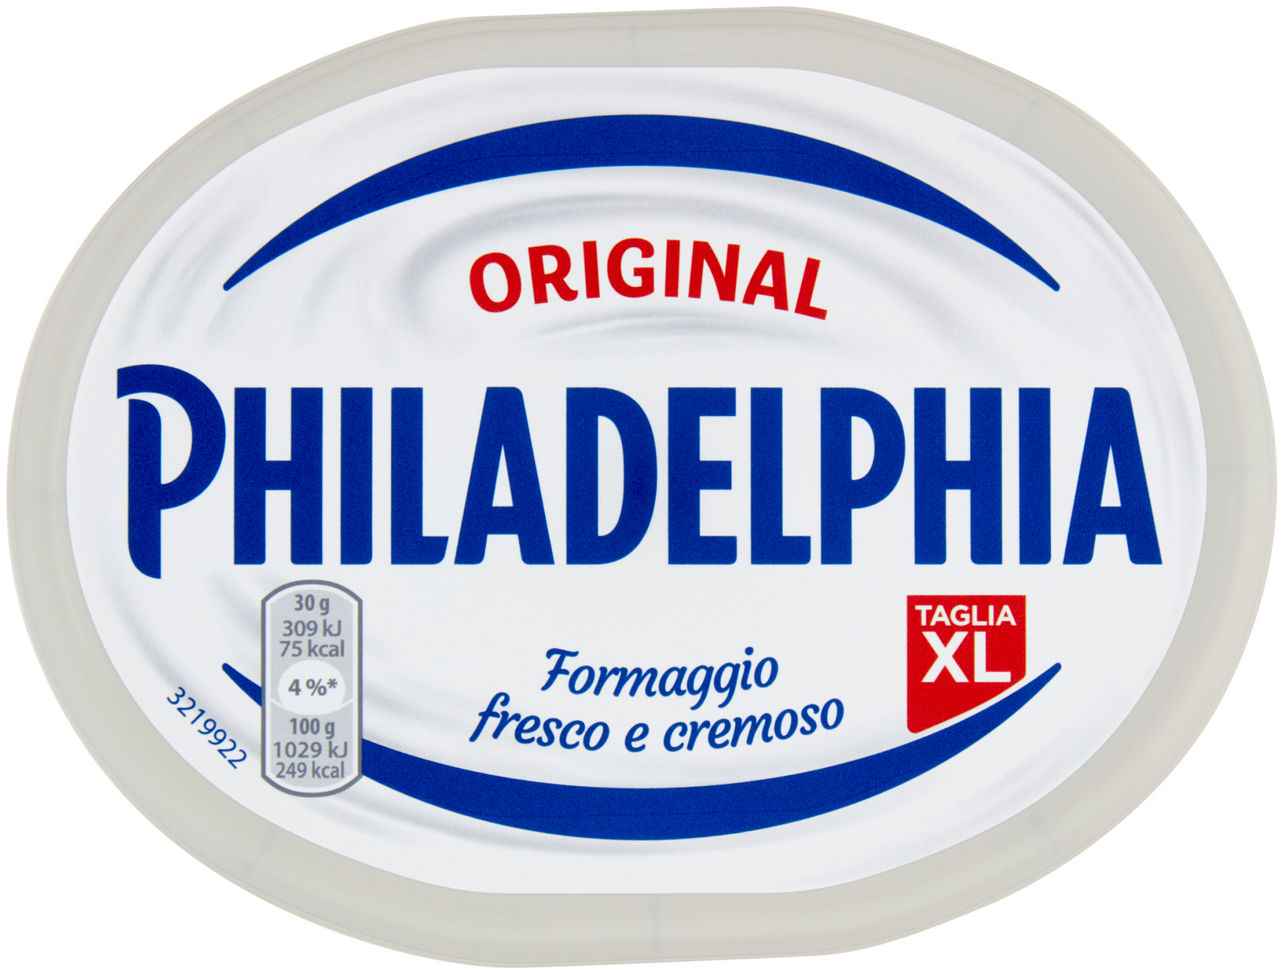 Philadelphia Original formaggio fresco spalmabile - 350g - 1